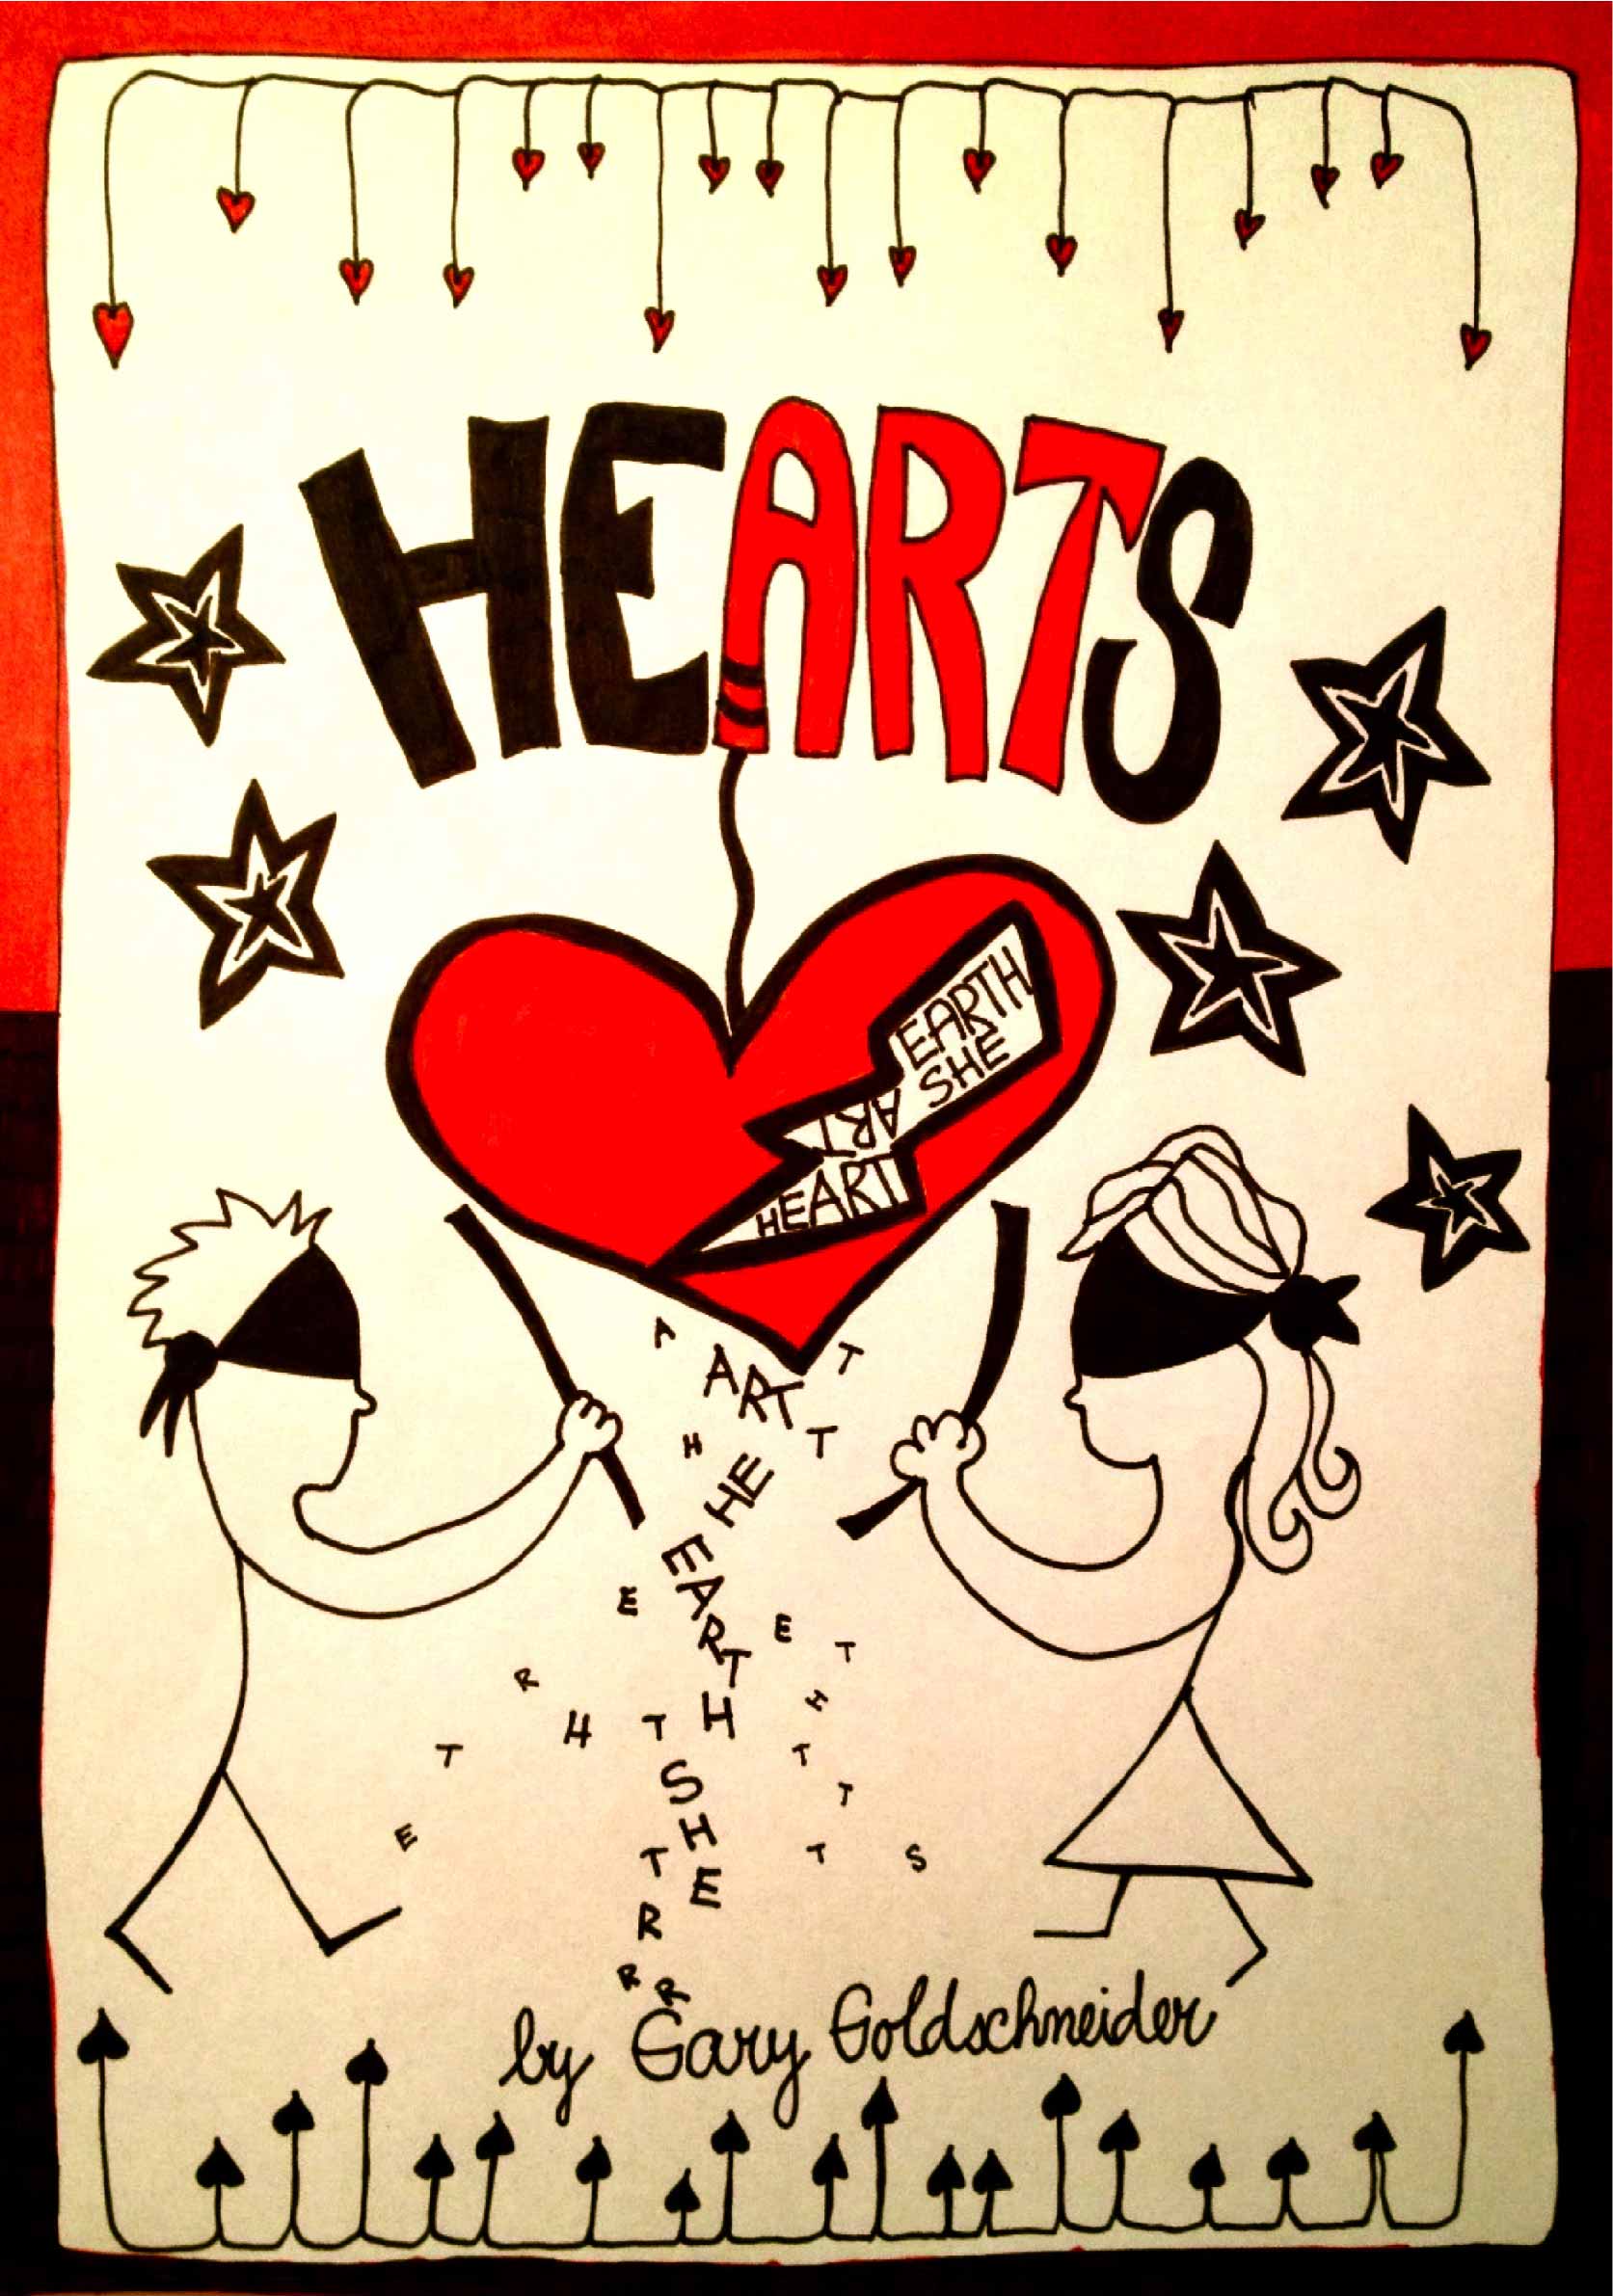 "Heart" by Gary Goldschneider cover by LuLu Lightning